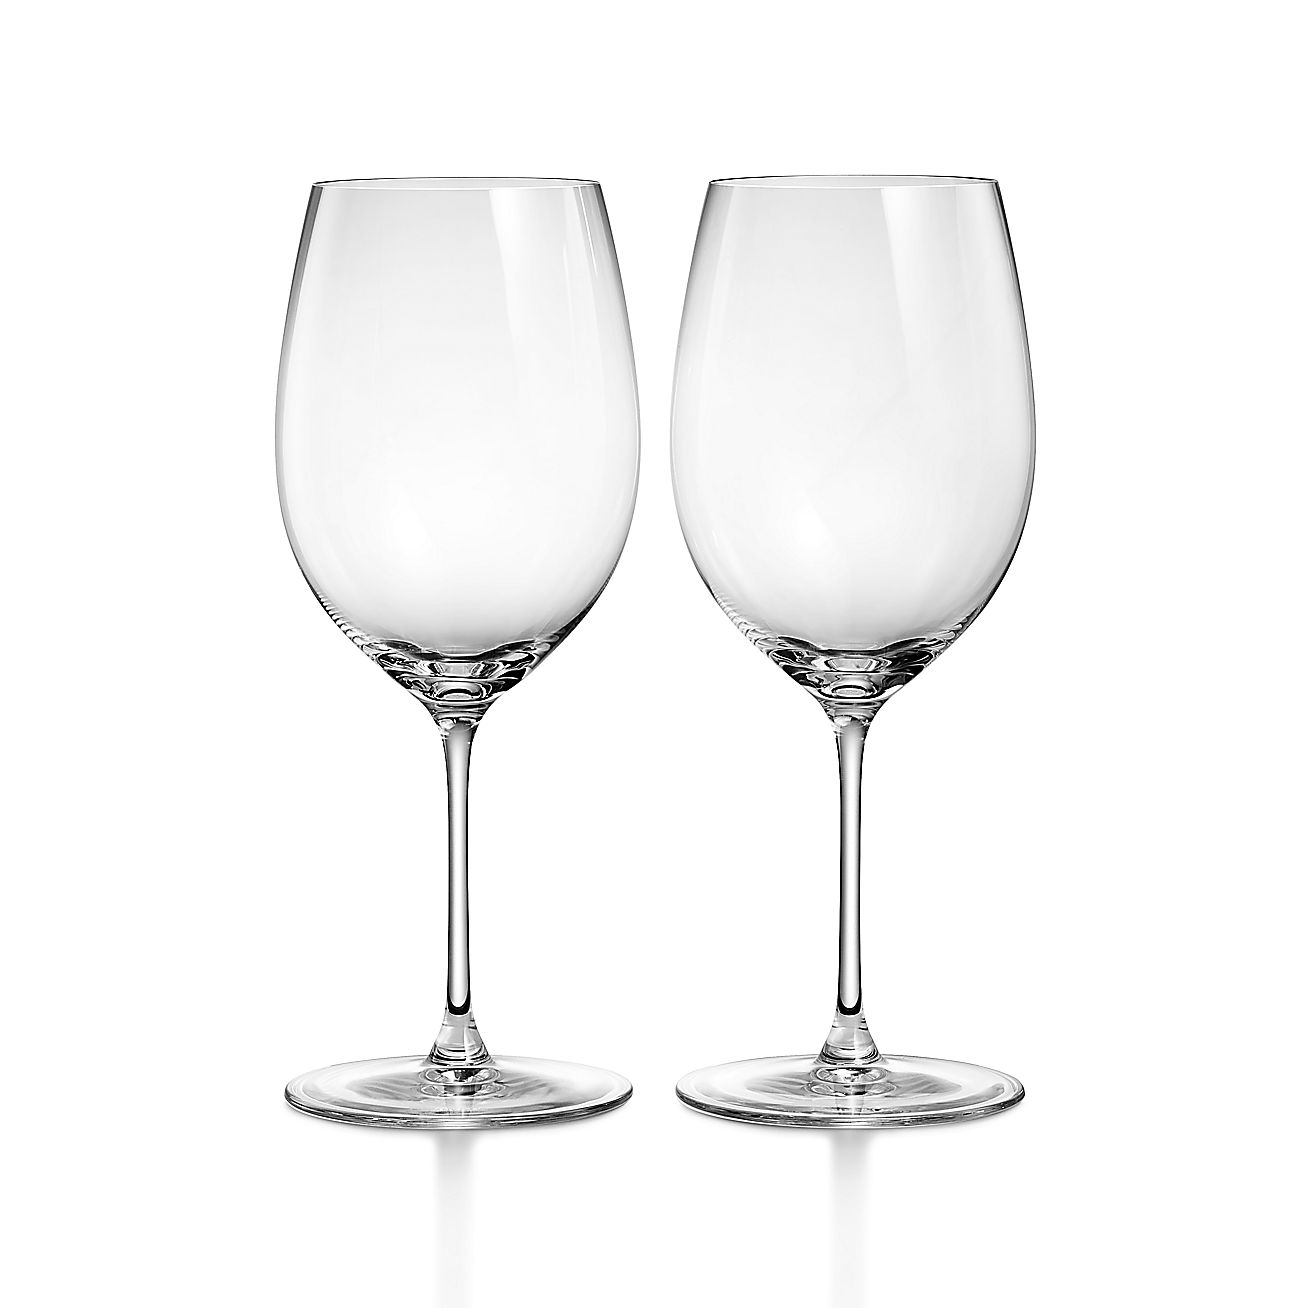 https://media.tiffany.com/is/image/Tiffany/EcomItemL2/tiffany-home-essentialsred-wine-glasses-73480361_1062585_ED.jpg?&op_usm=2.0,1.0,6.0&$cropN=0.1,0.1,0.8,0.8&defaultImage=NoImageAvailableInternal&